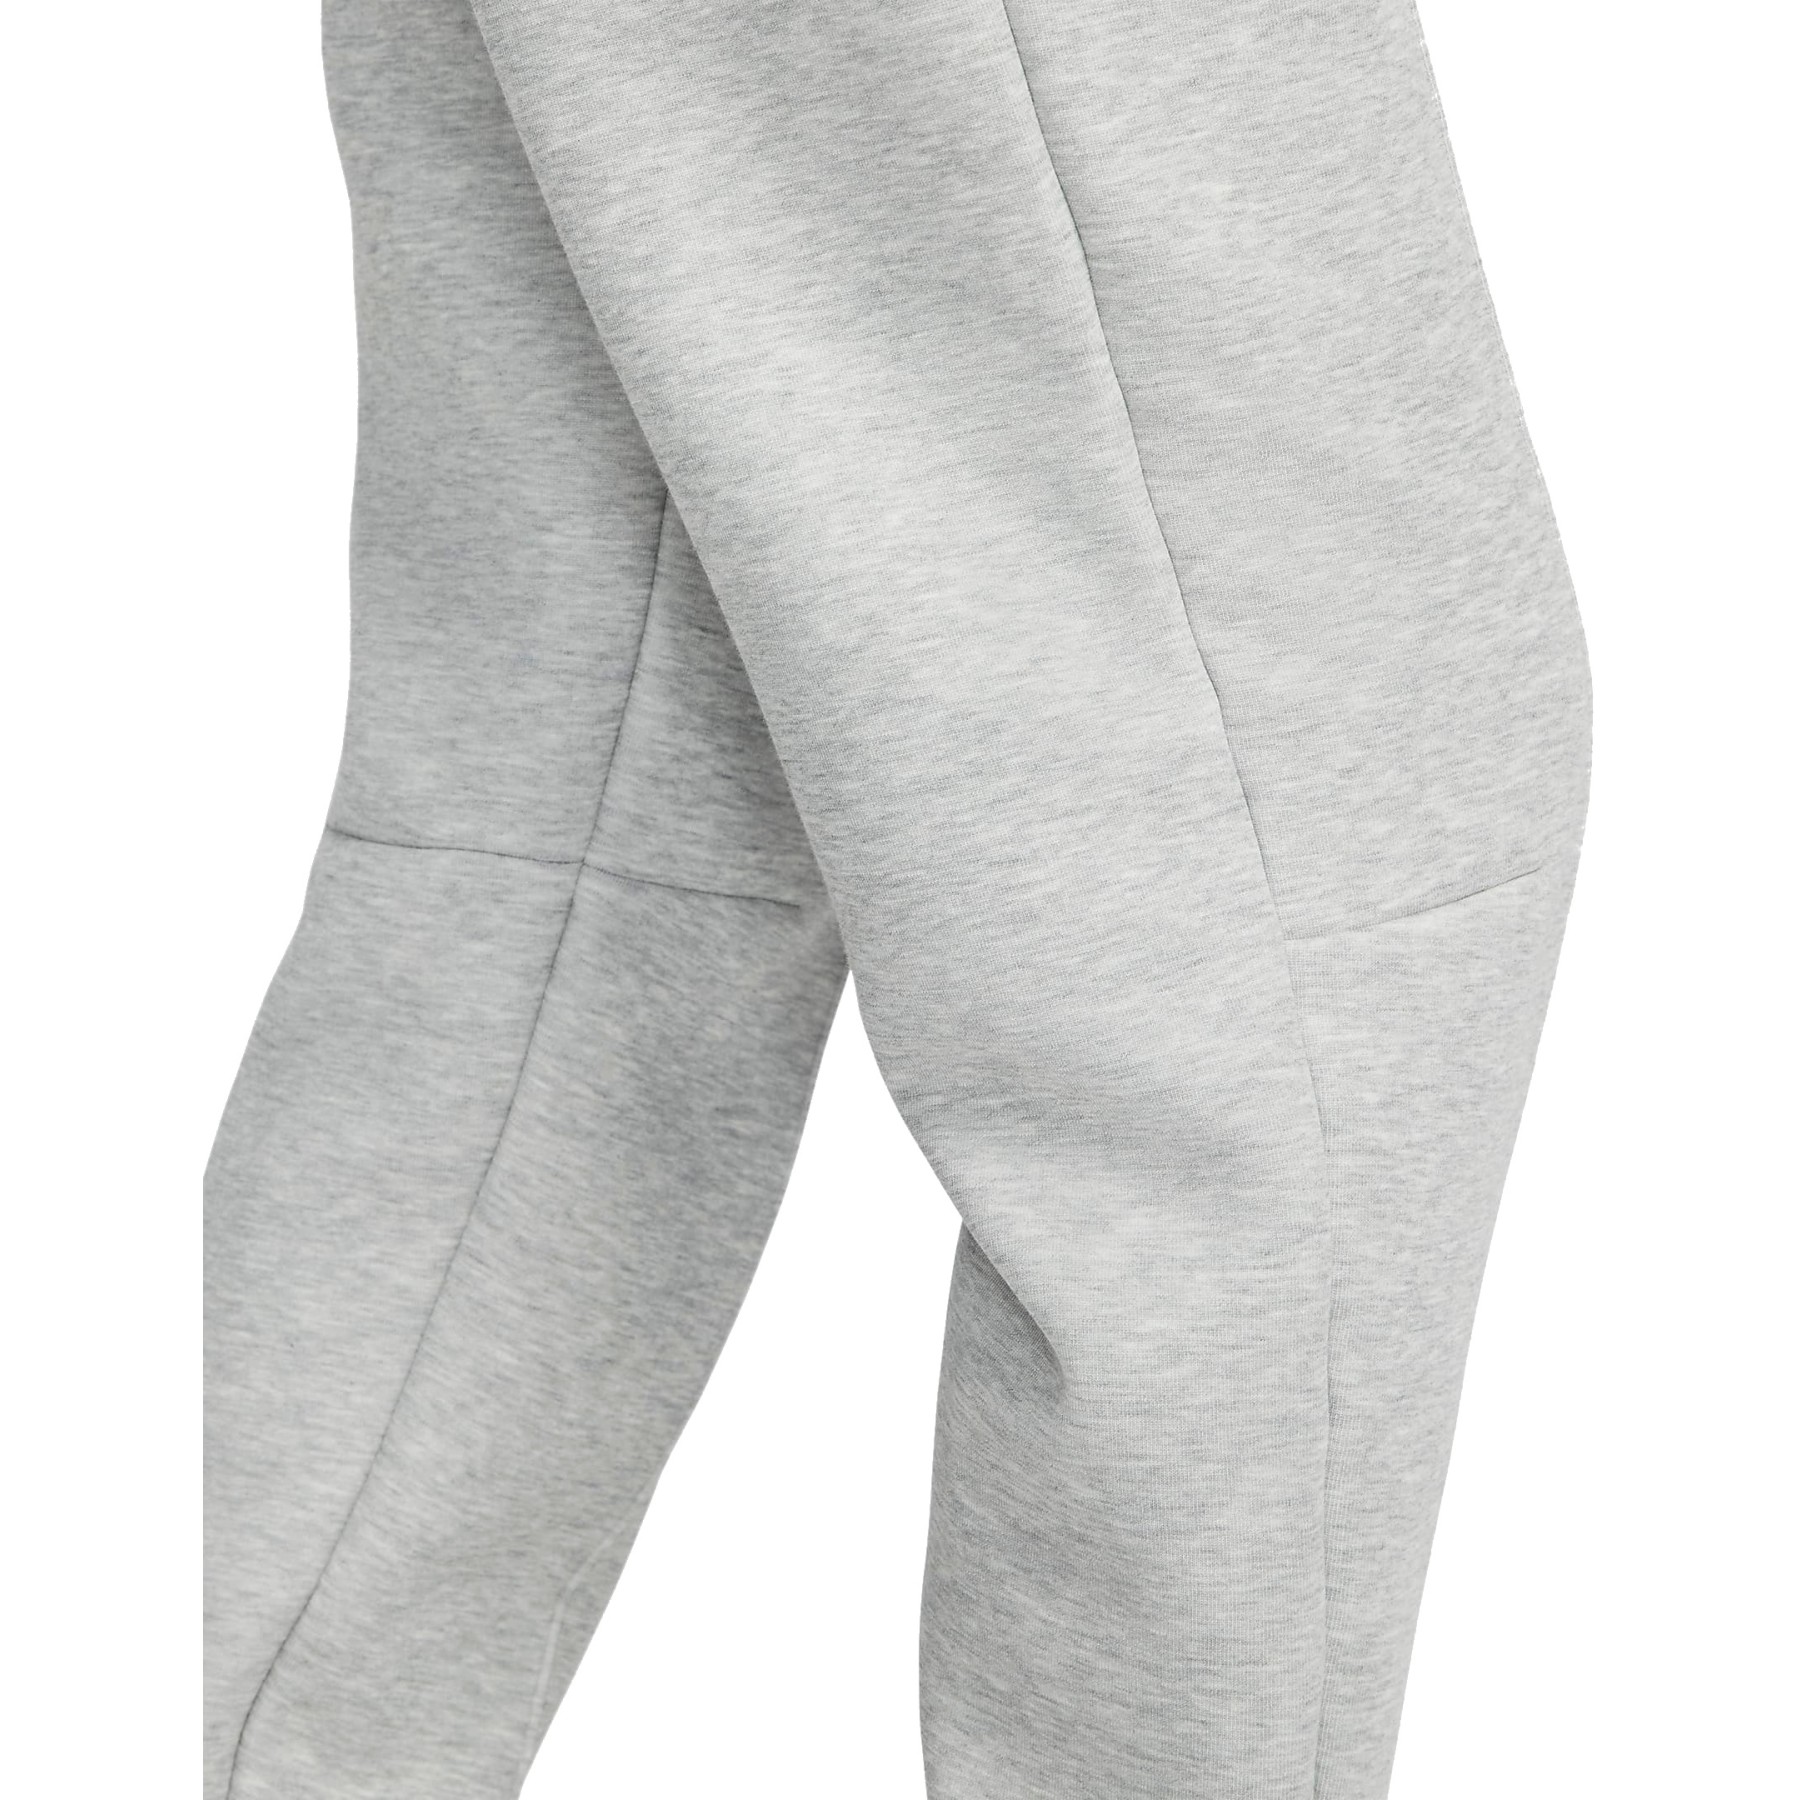 Nike Sportswear Womens Joggers Pants Dark Grey Heather CZ8340 063 - SIZE  LARGE